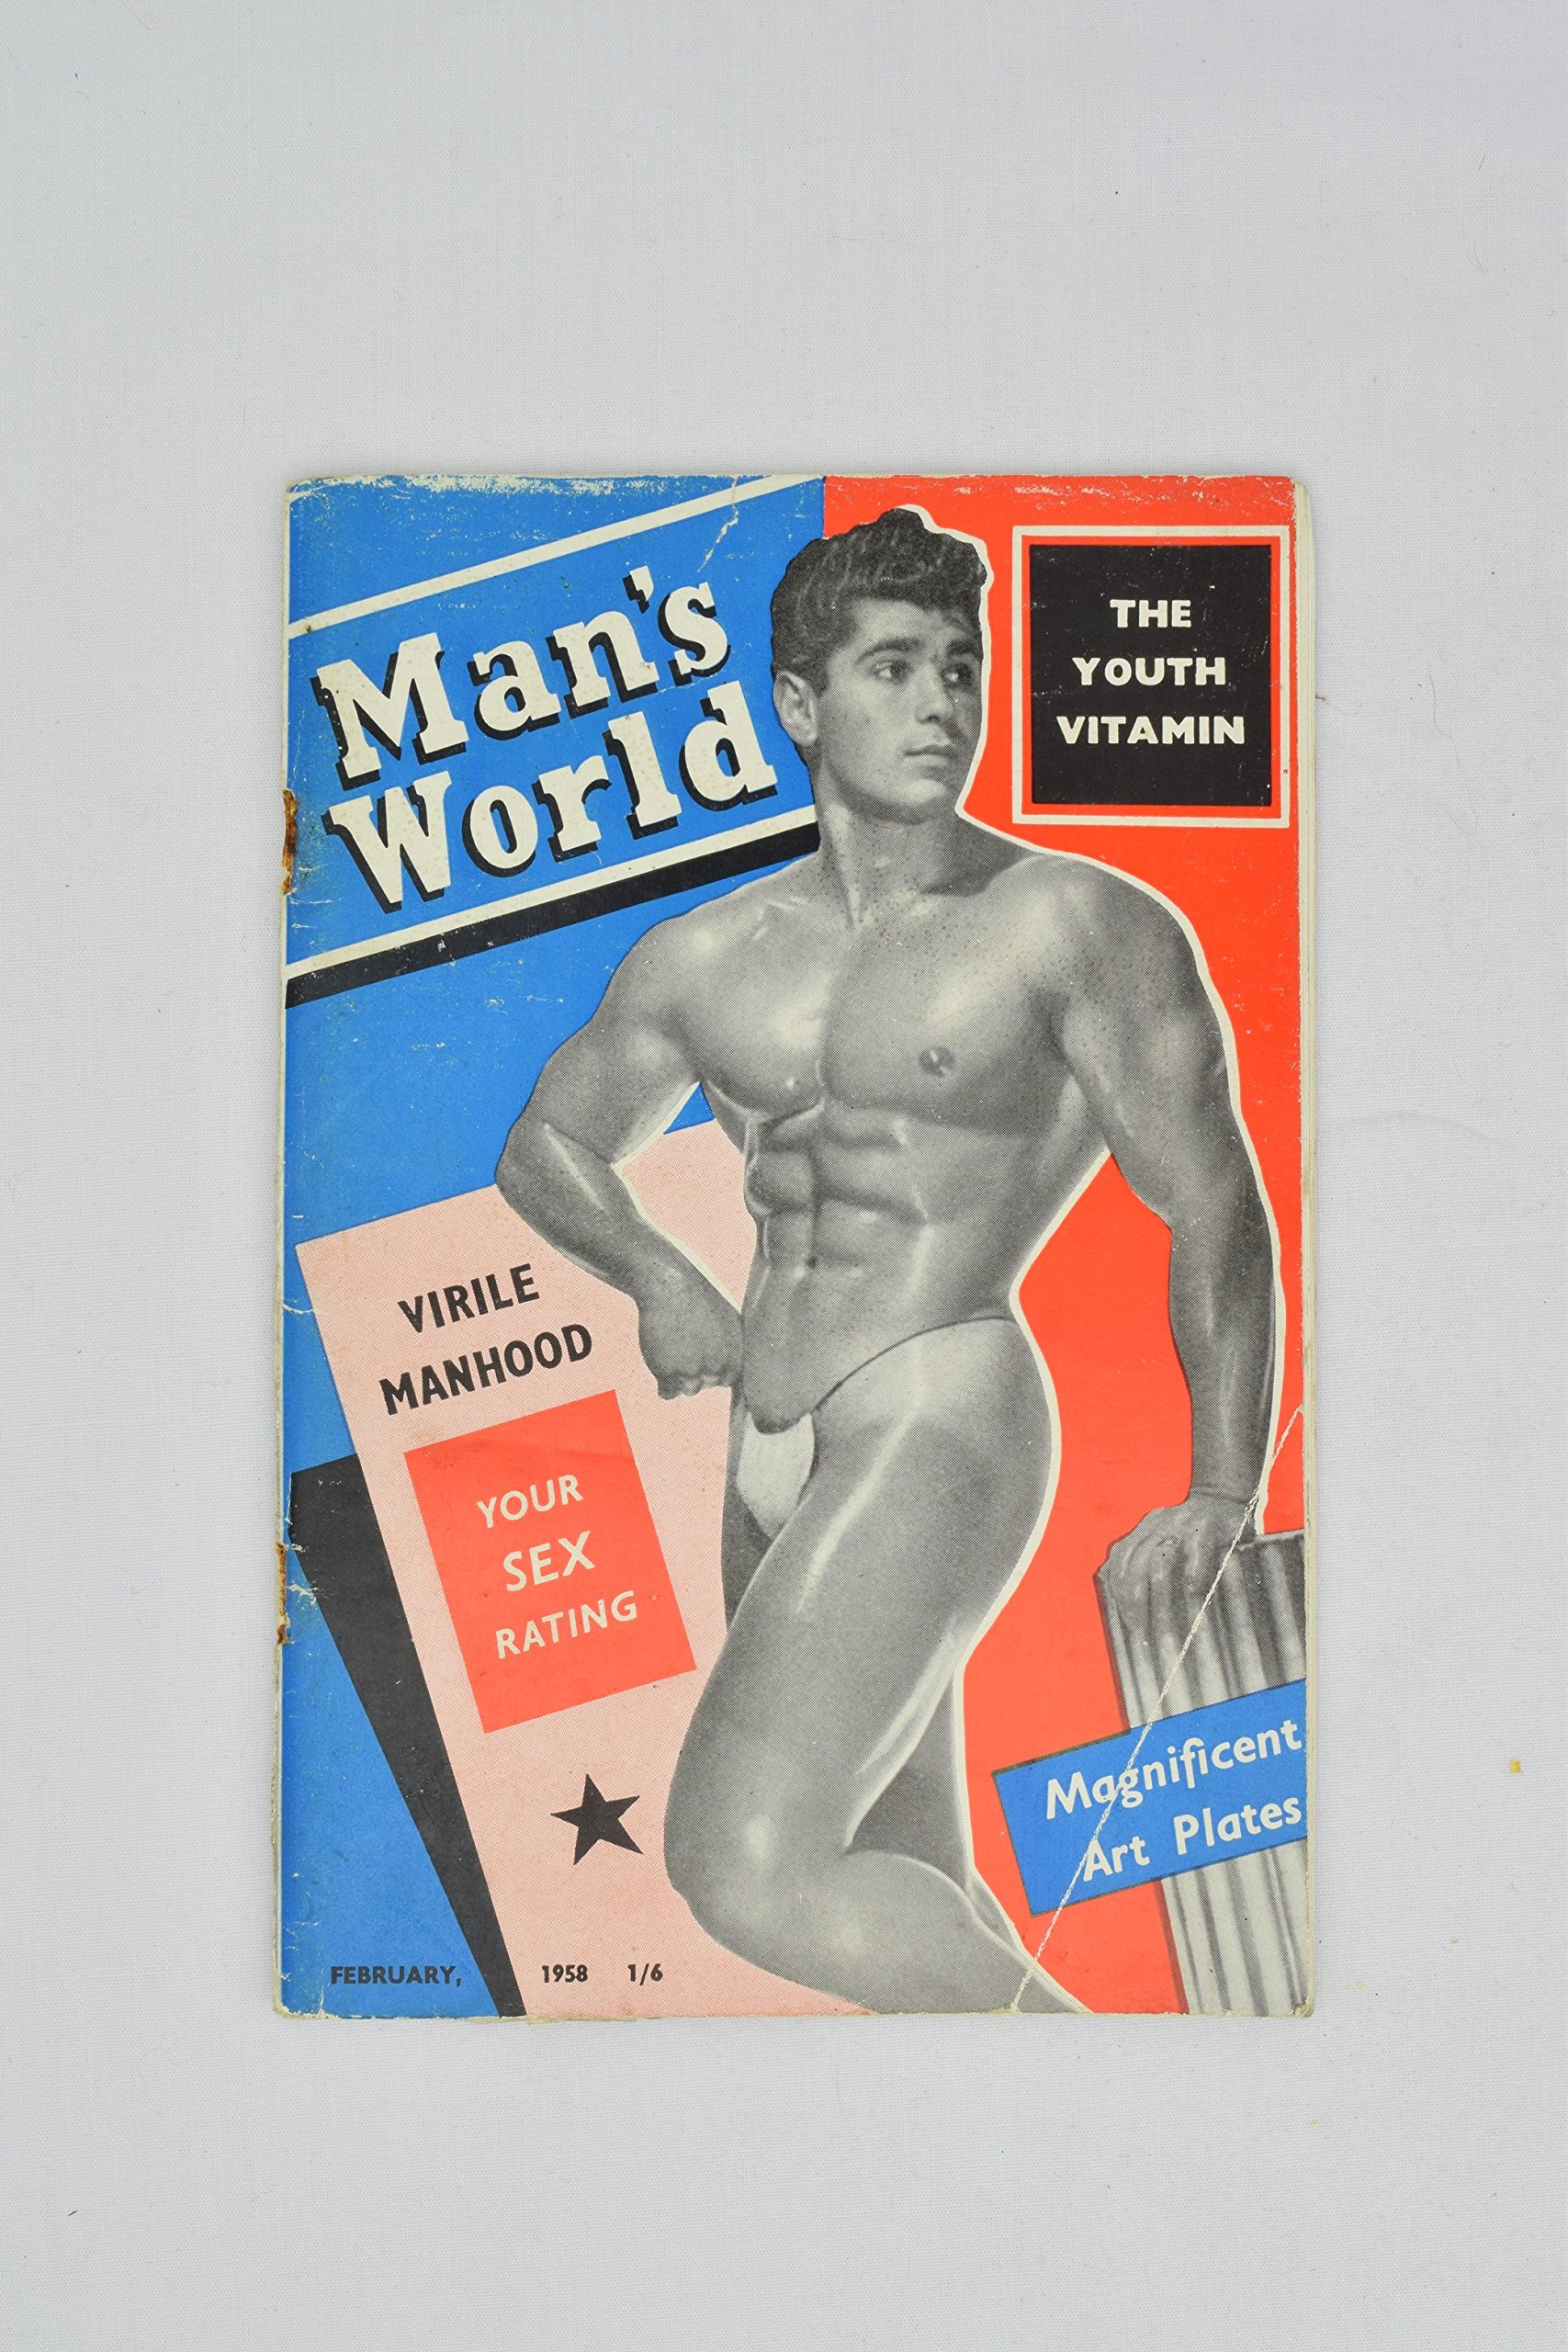 magazine world s man vintage